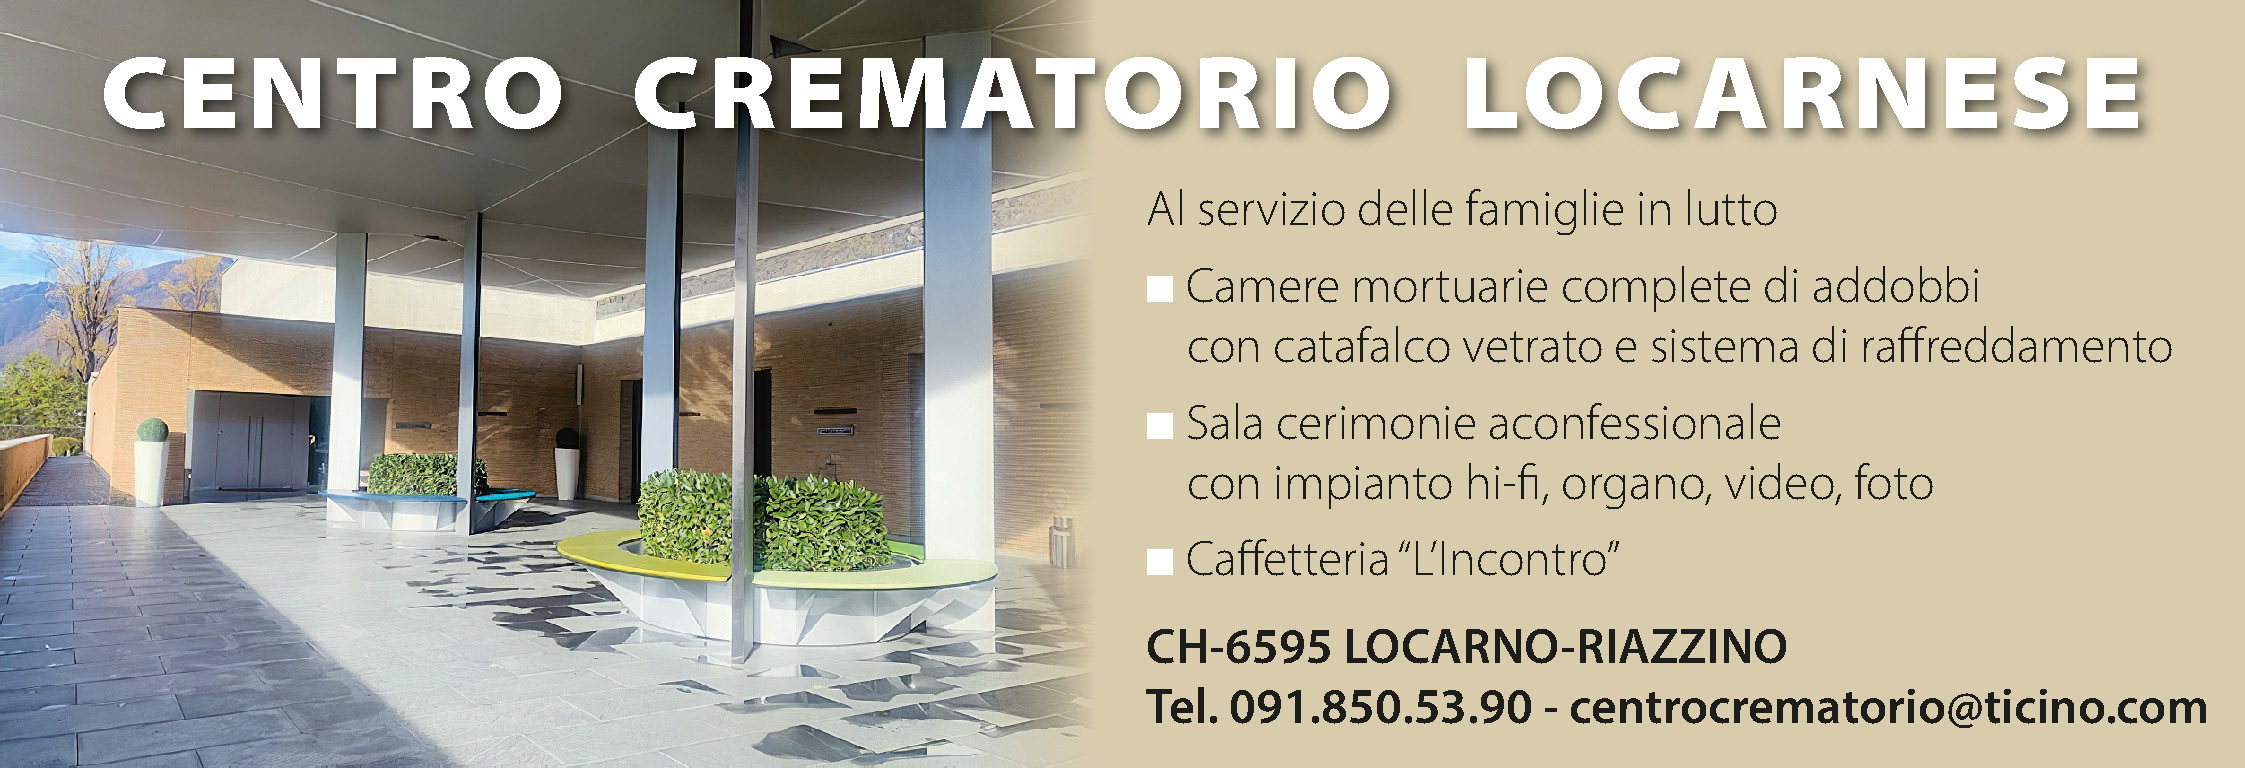 A_Centro_crematorio